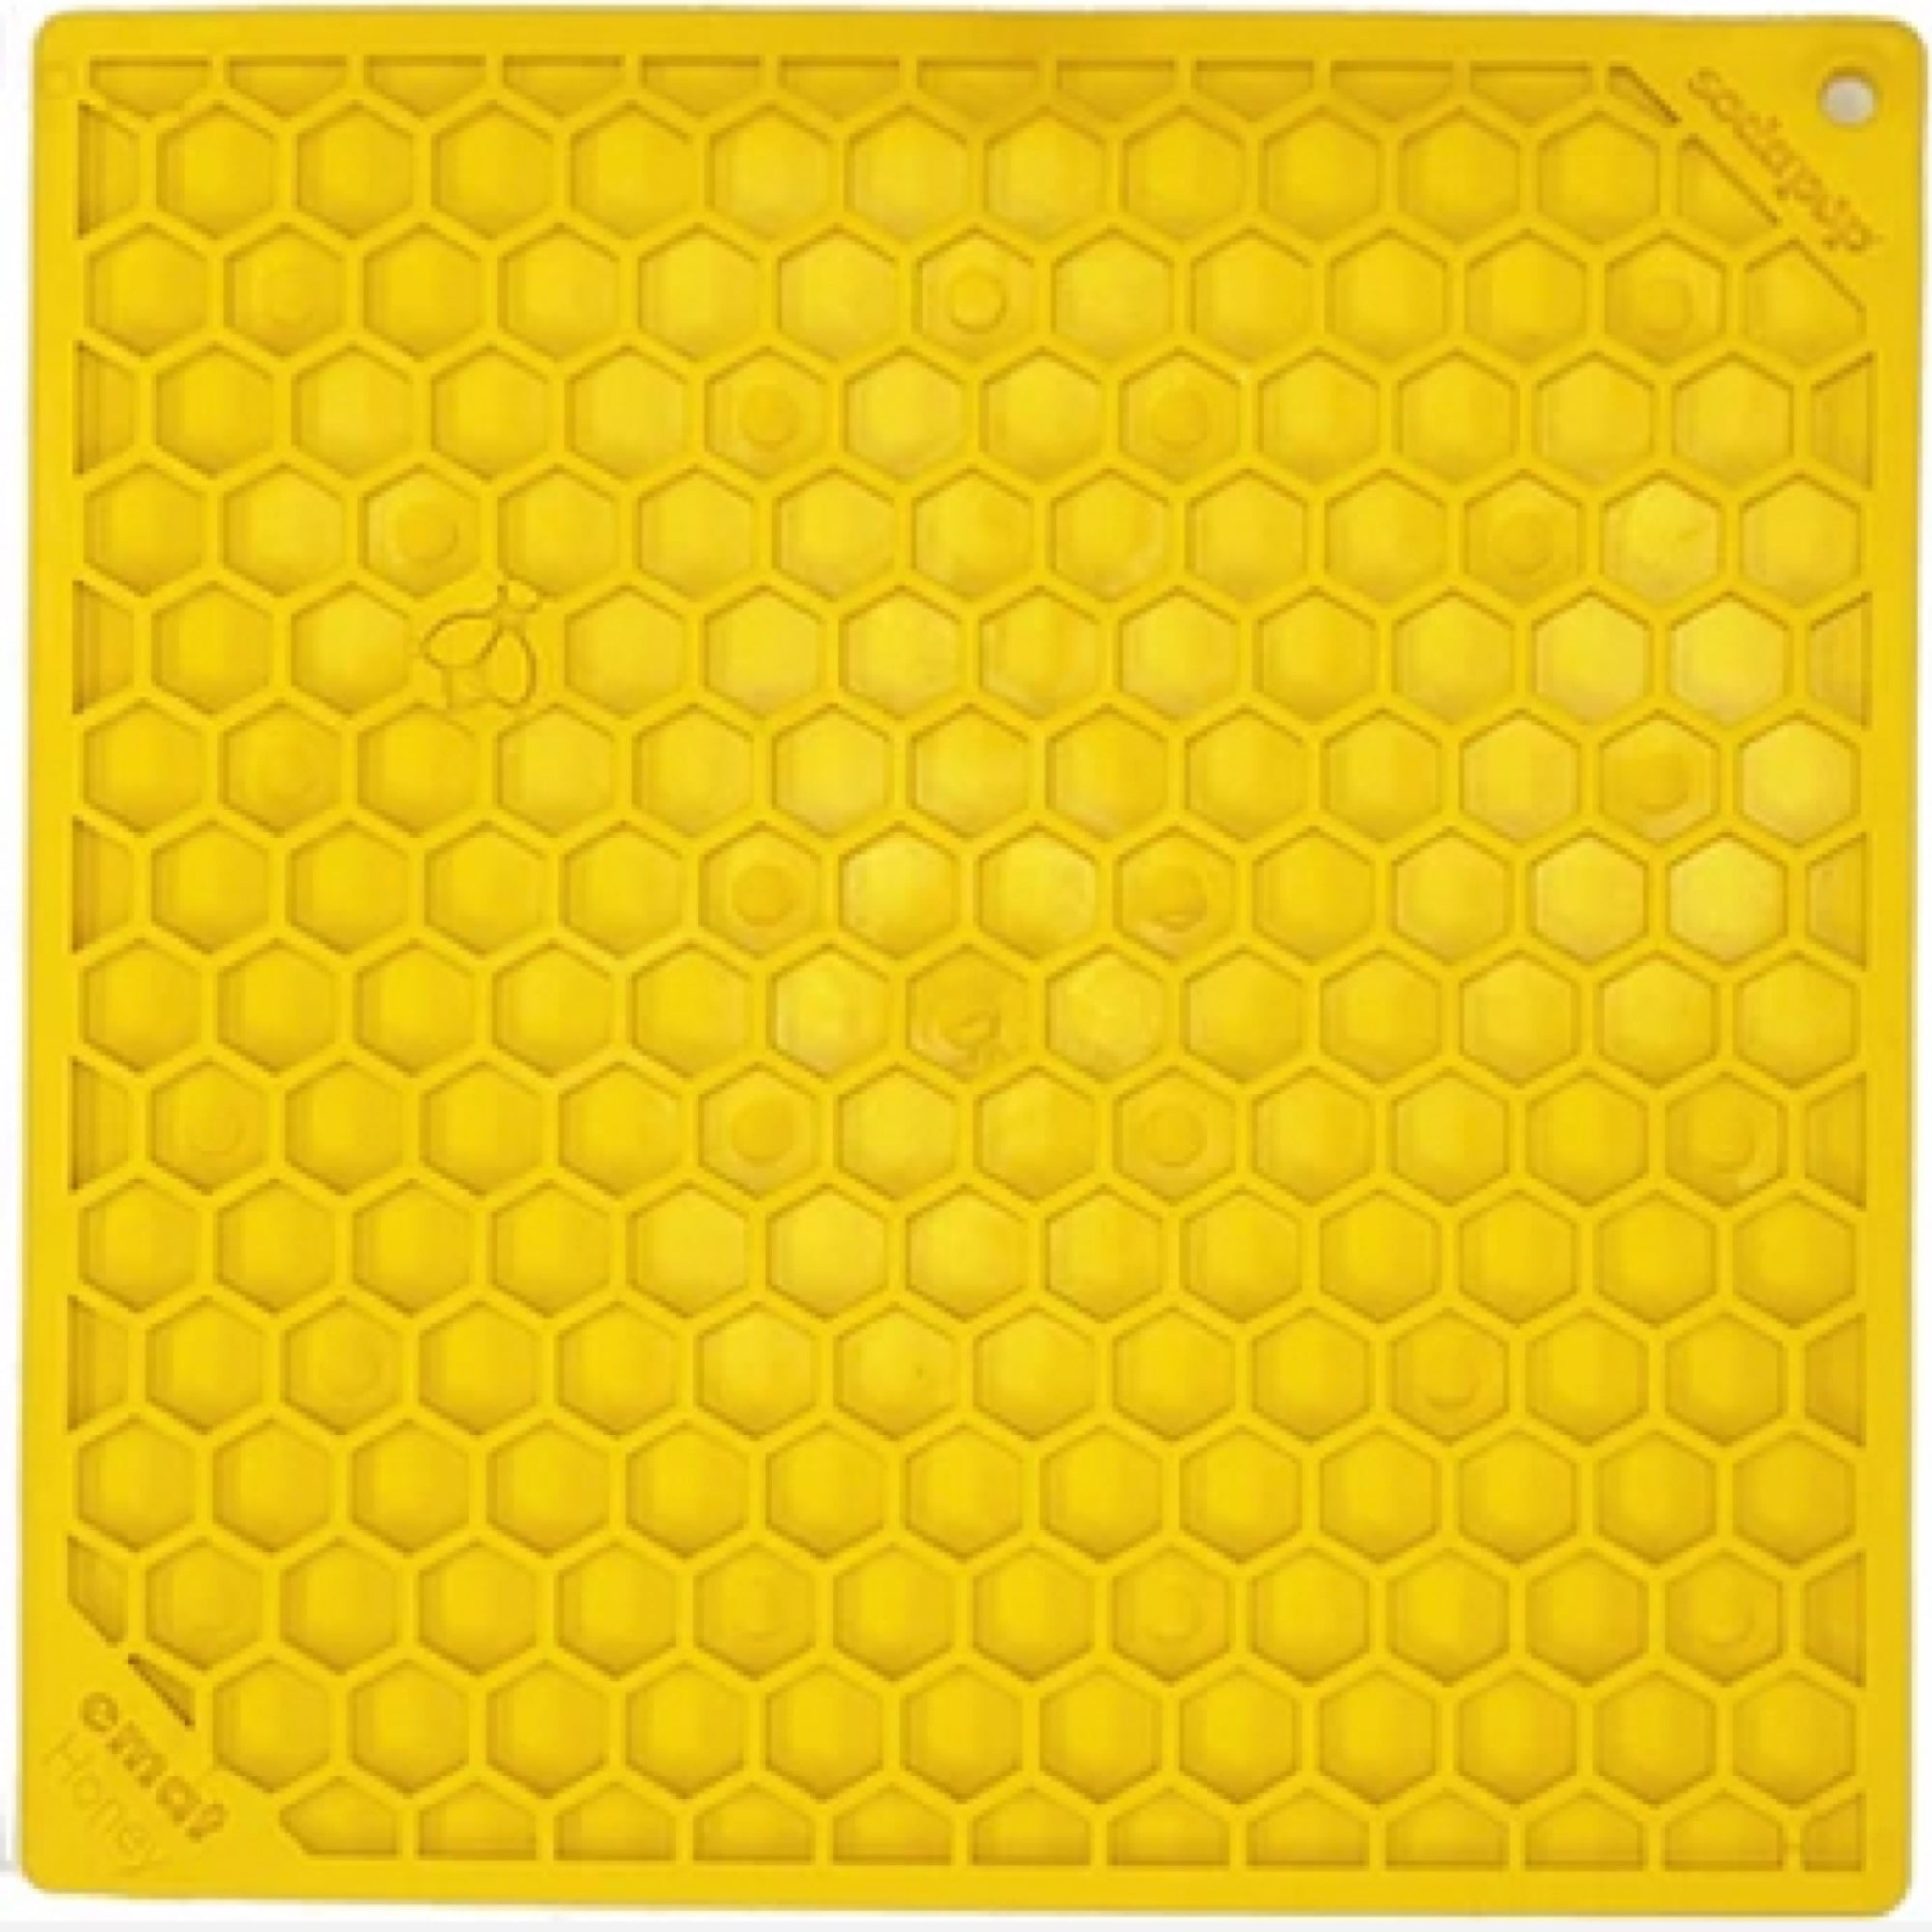 Honeycomb eMat (Large) Enrichment Lick Mat